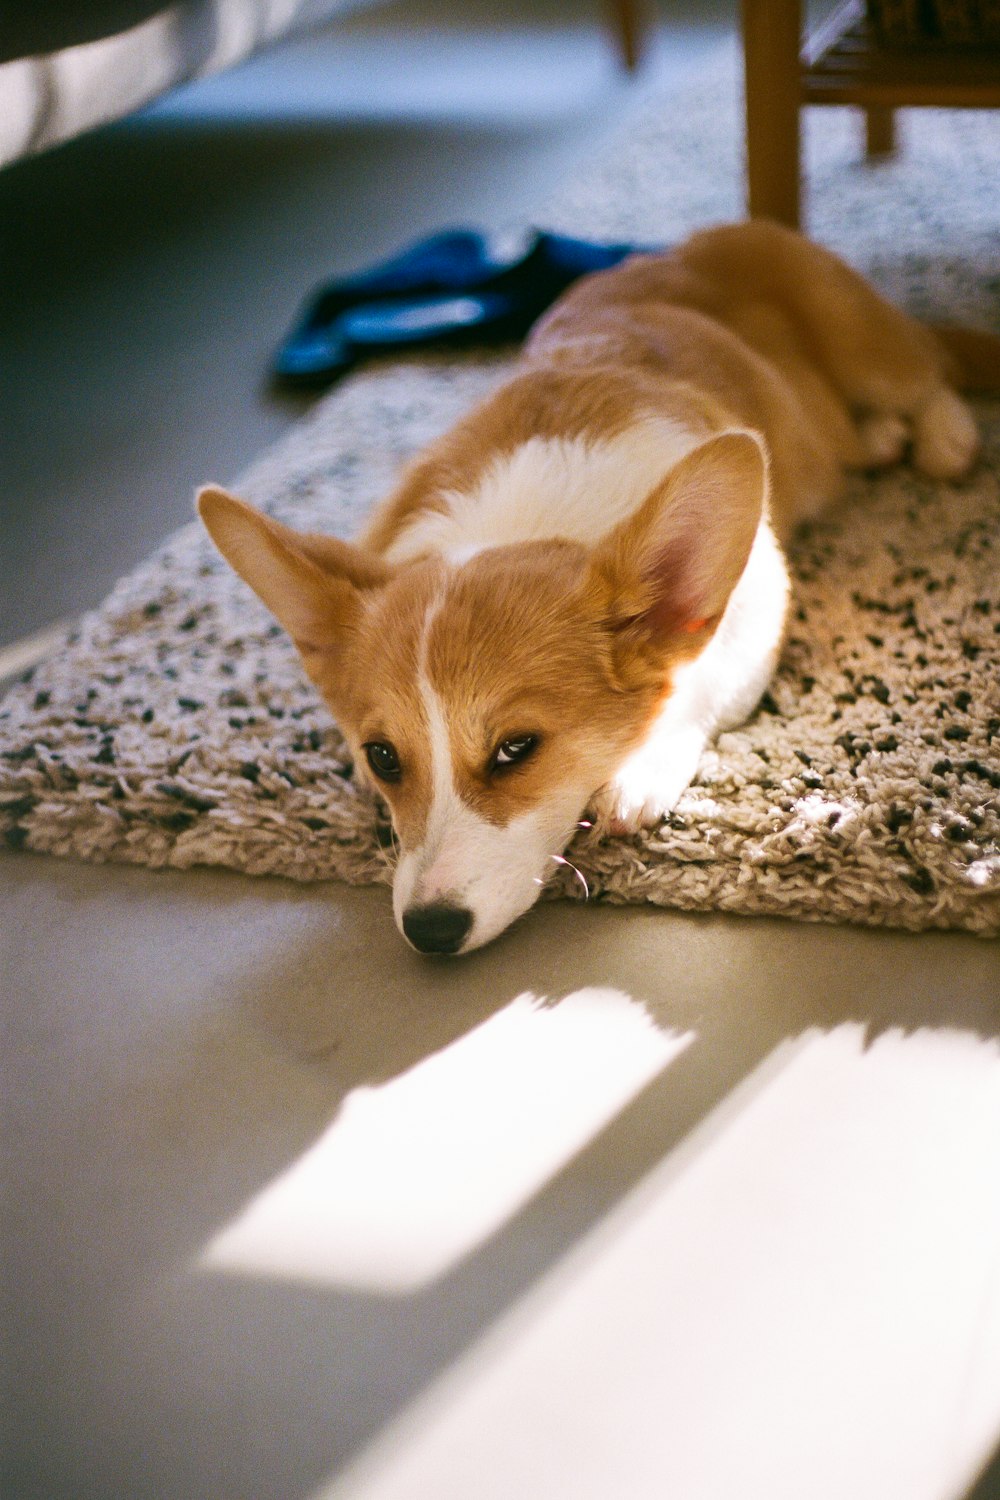 a dog lying on a rug